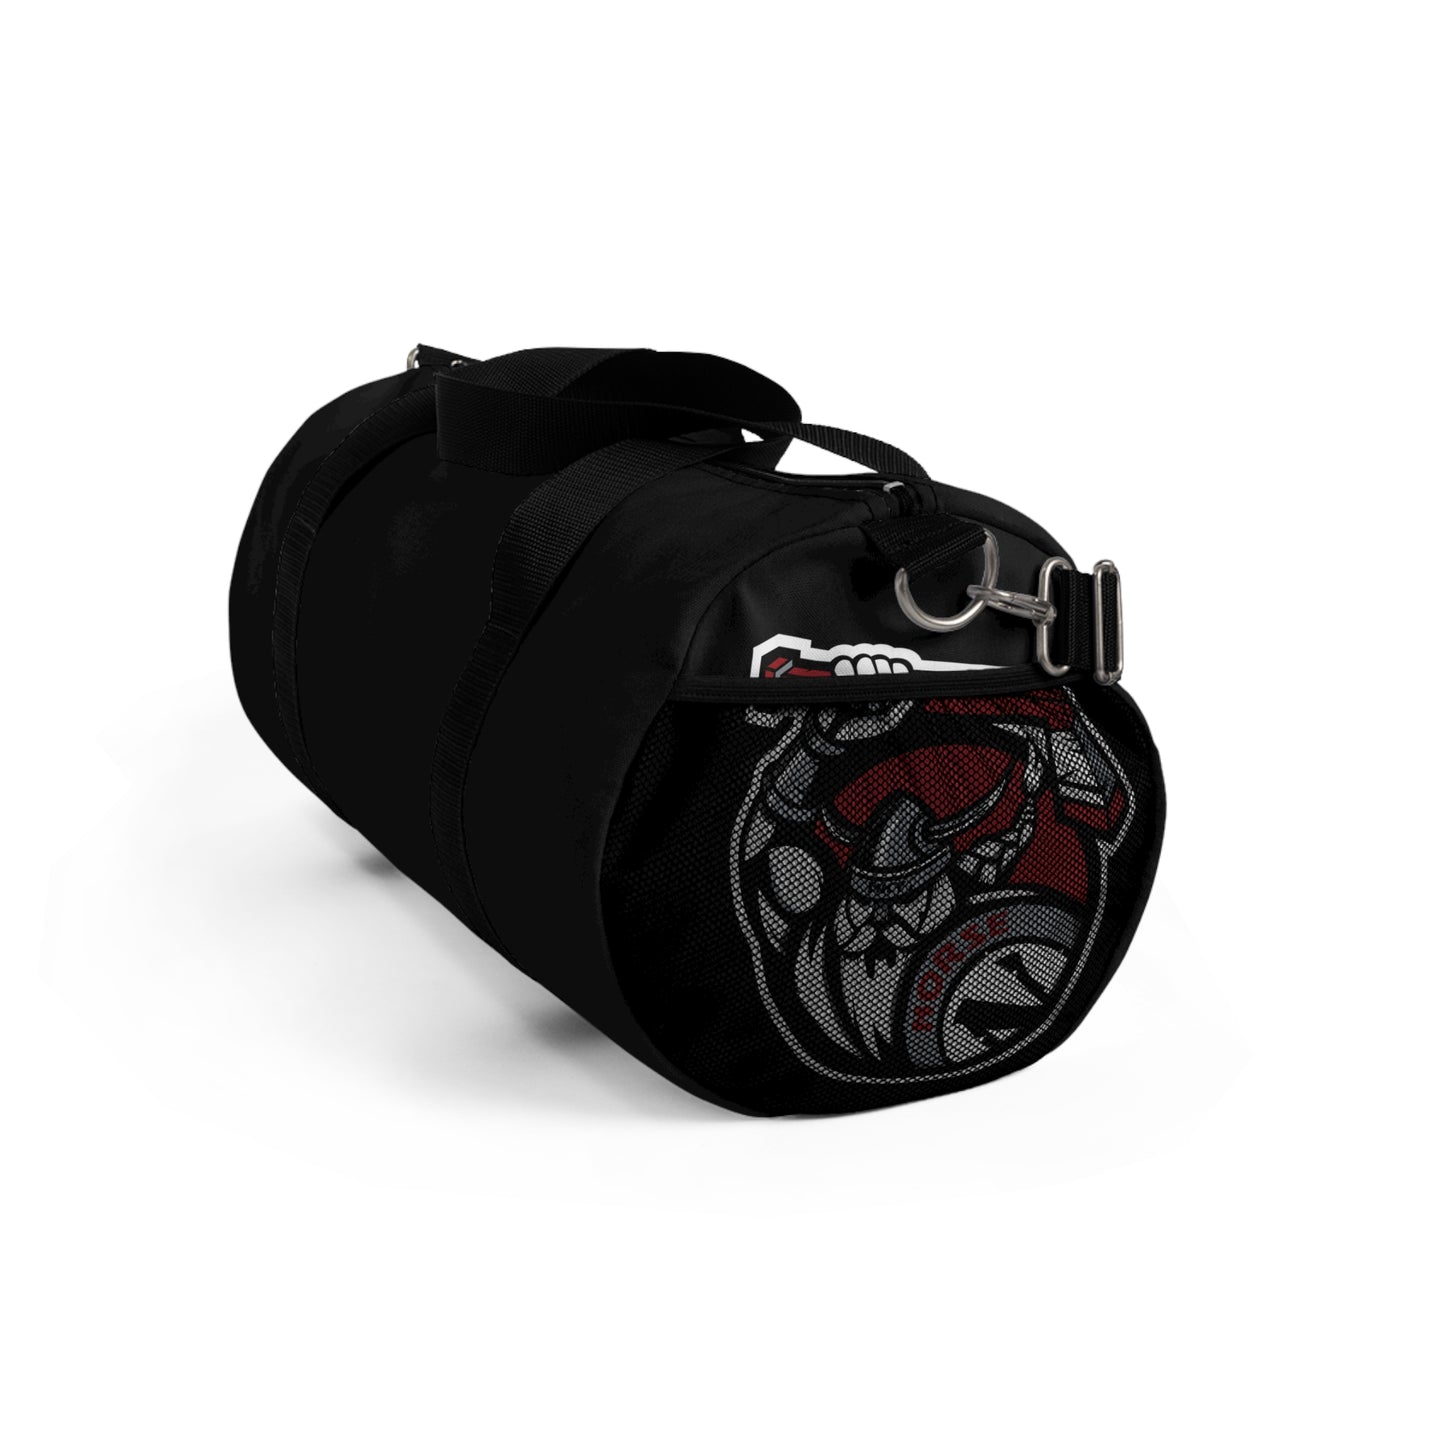 Duffle Bag | Norse Hockey Logo